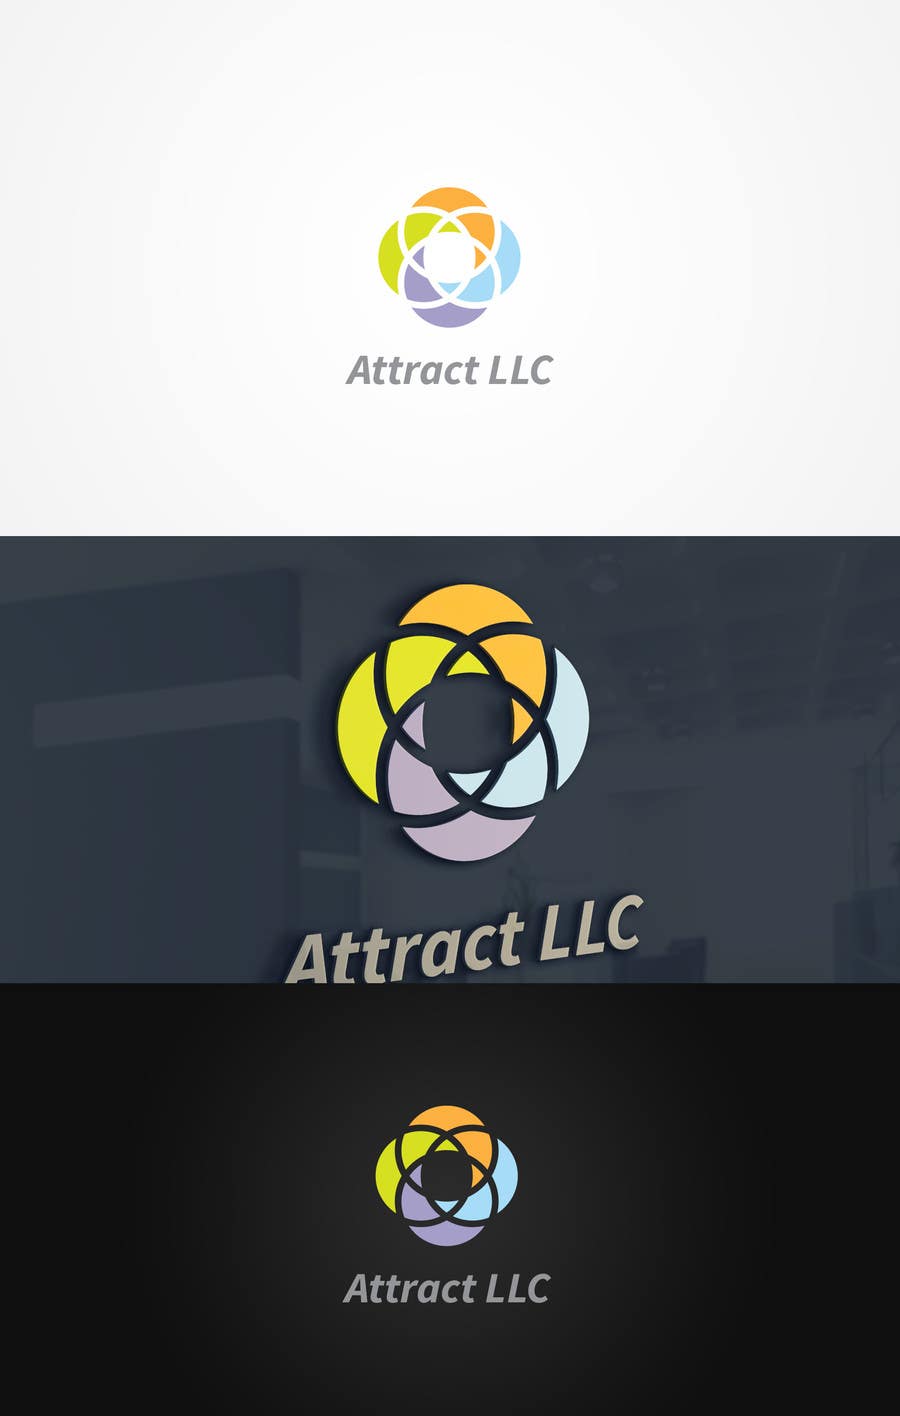 Entri Kontes #452 untuk                                                Design a Corporate Logo for "Attract LLC."
                                            